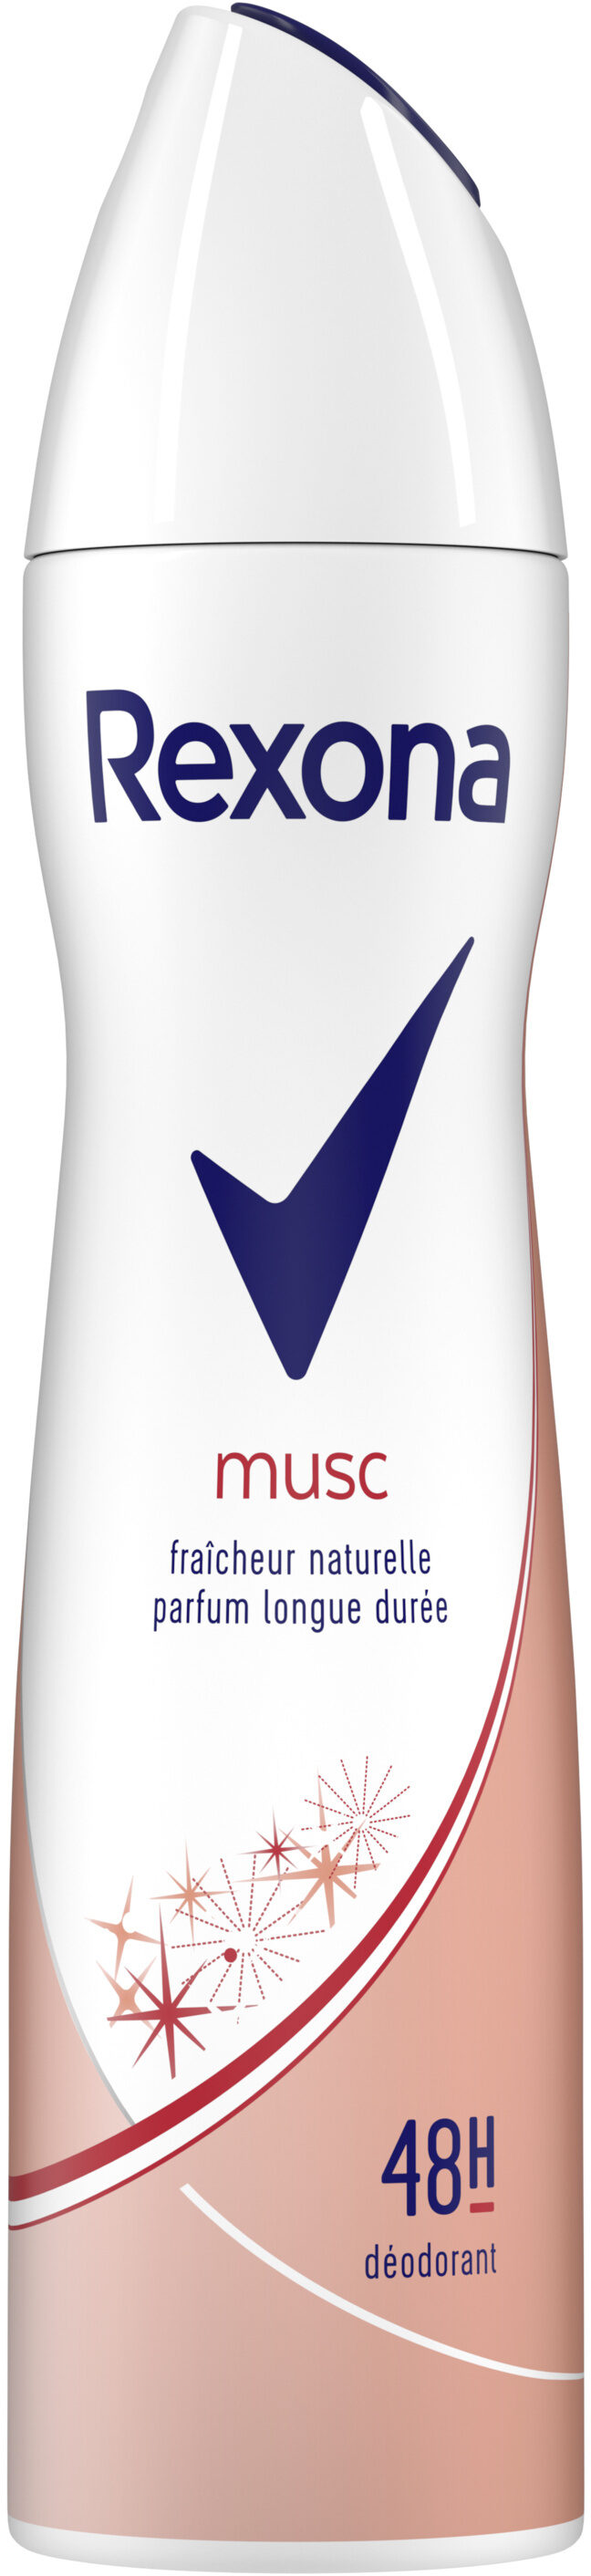 Rexona Déodorant Femme Spray Musc Fraîcheur Naturelle 200ml - उत्पाद - fr